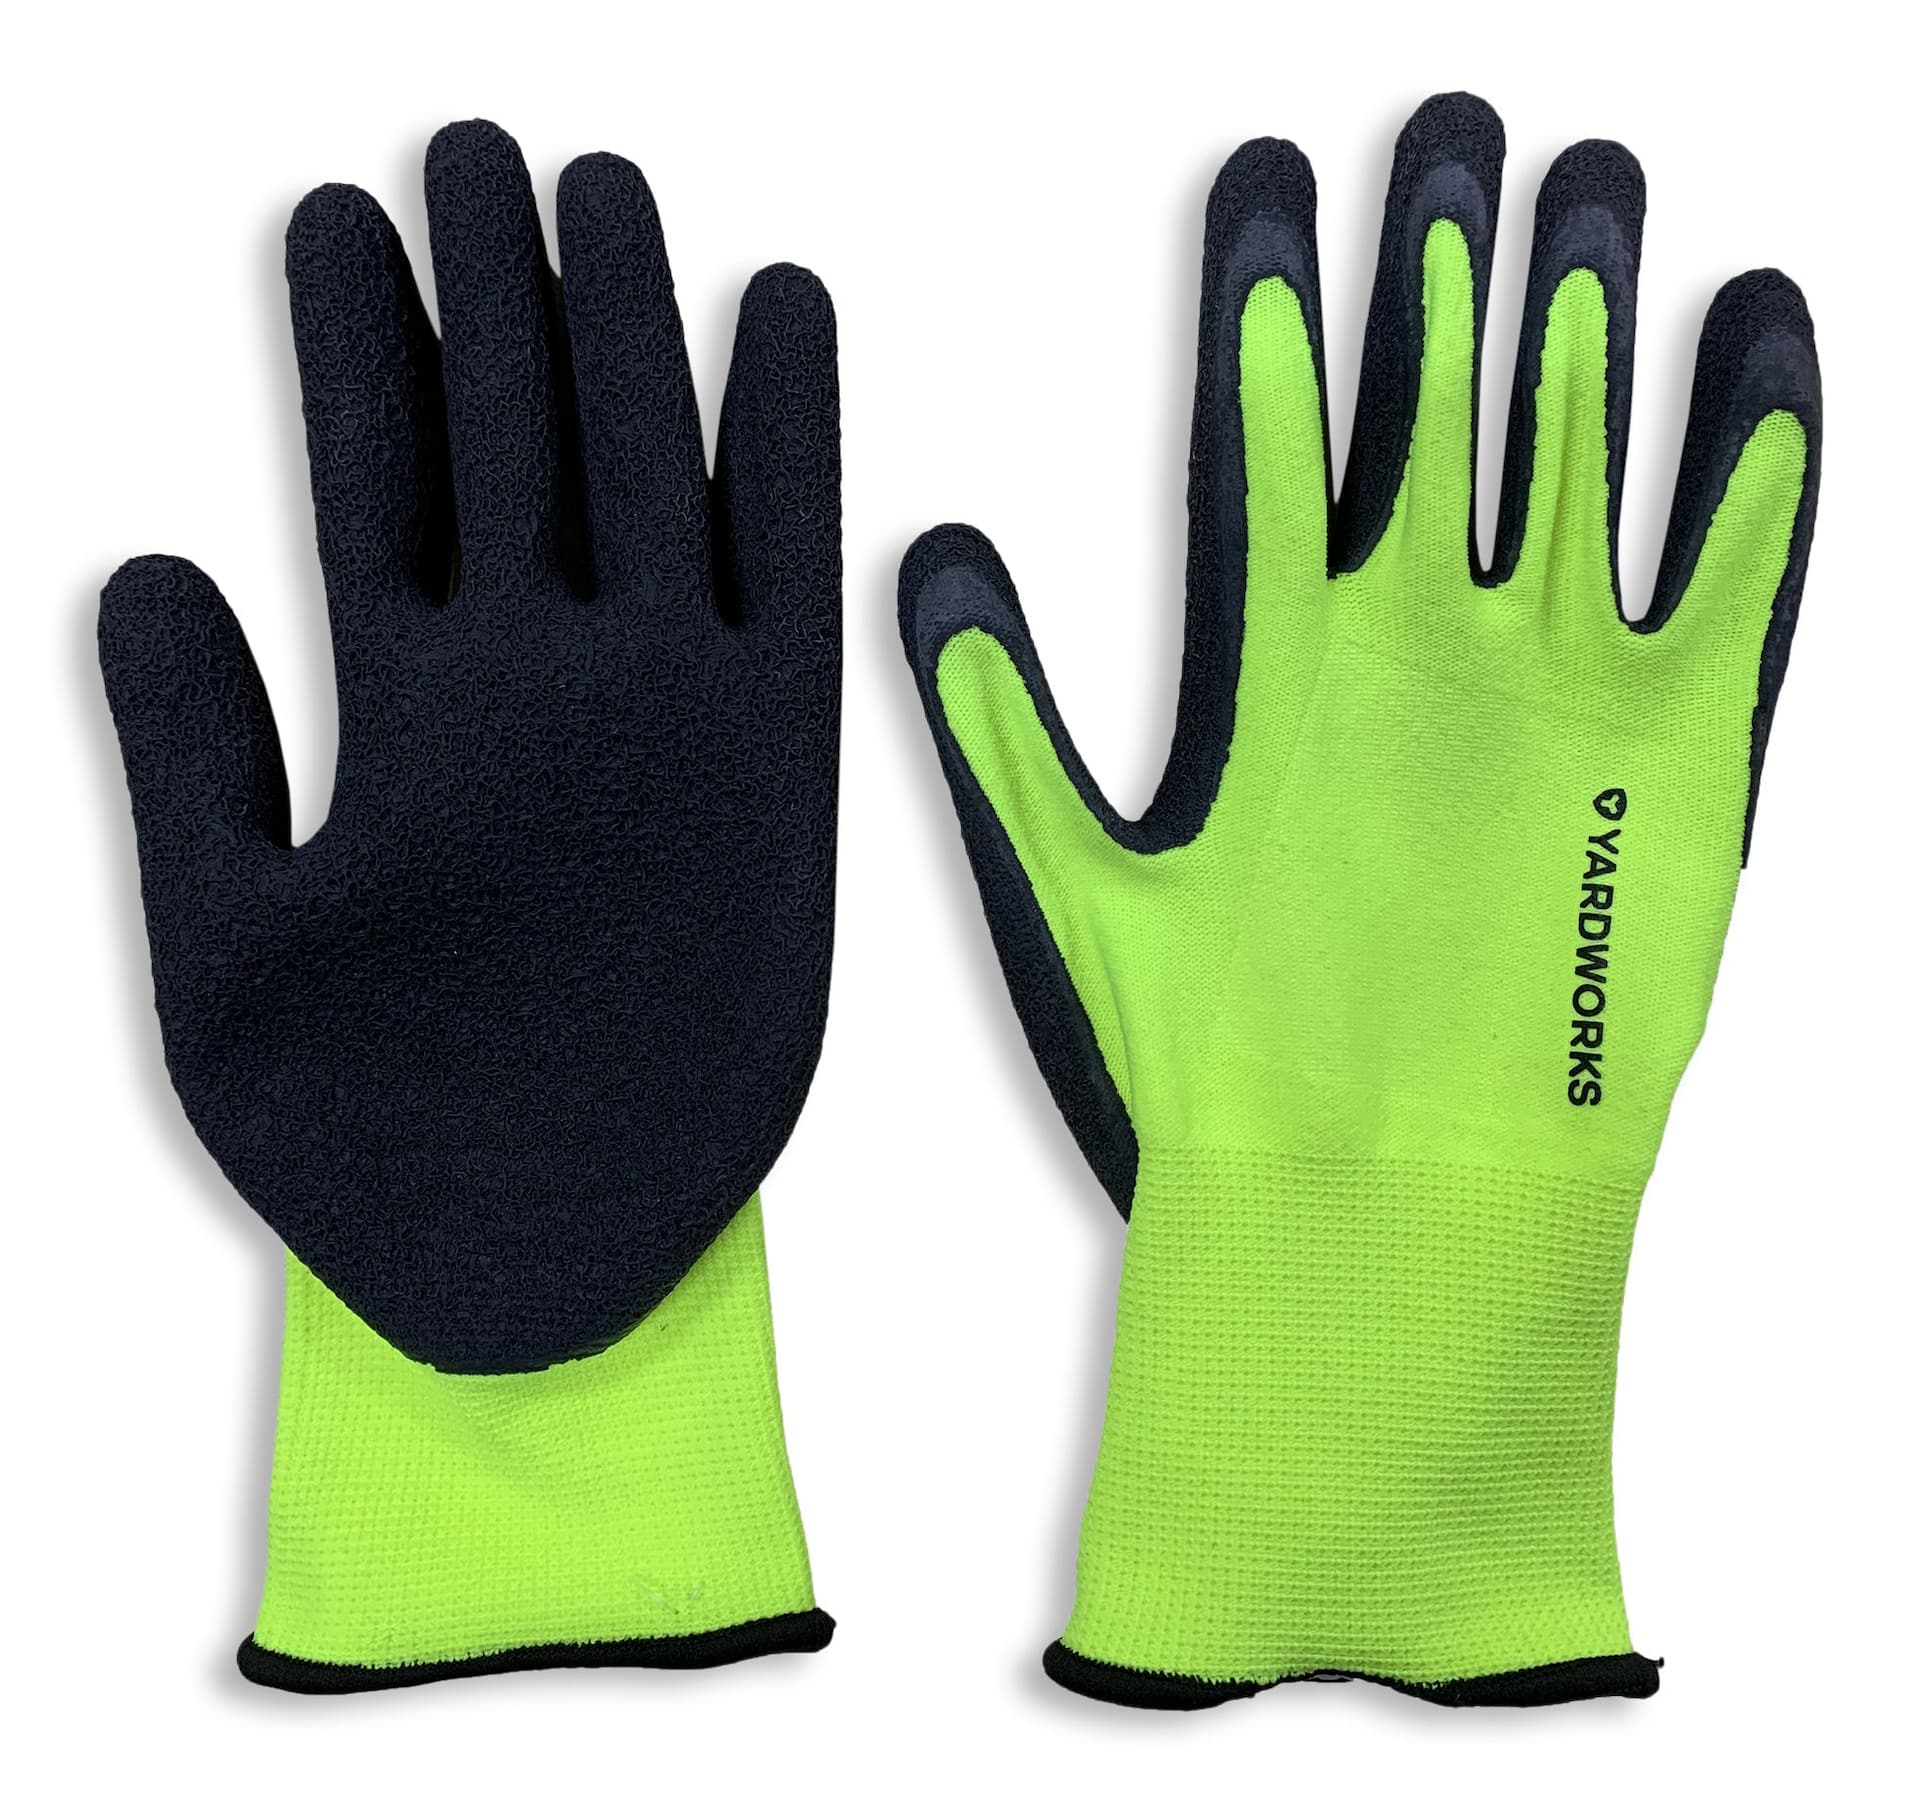 Yardworks Latex Gripping Gloves